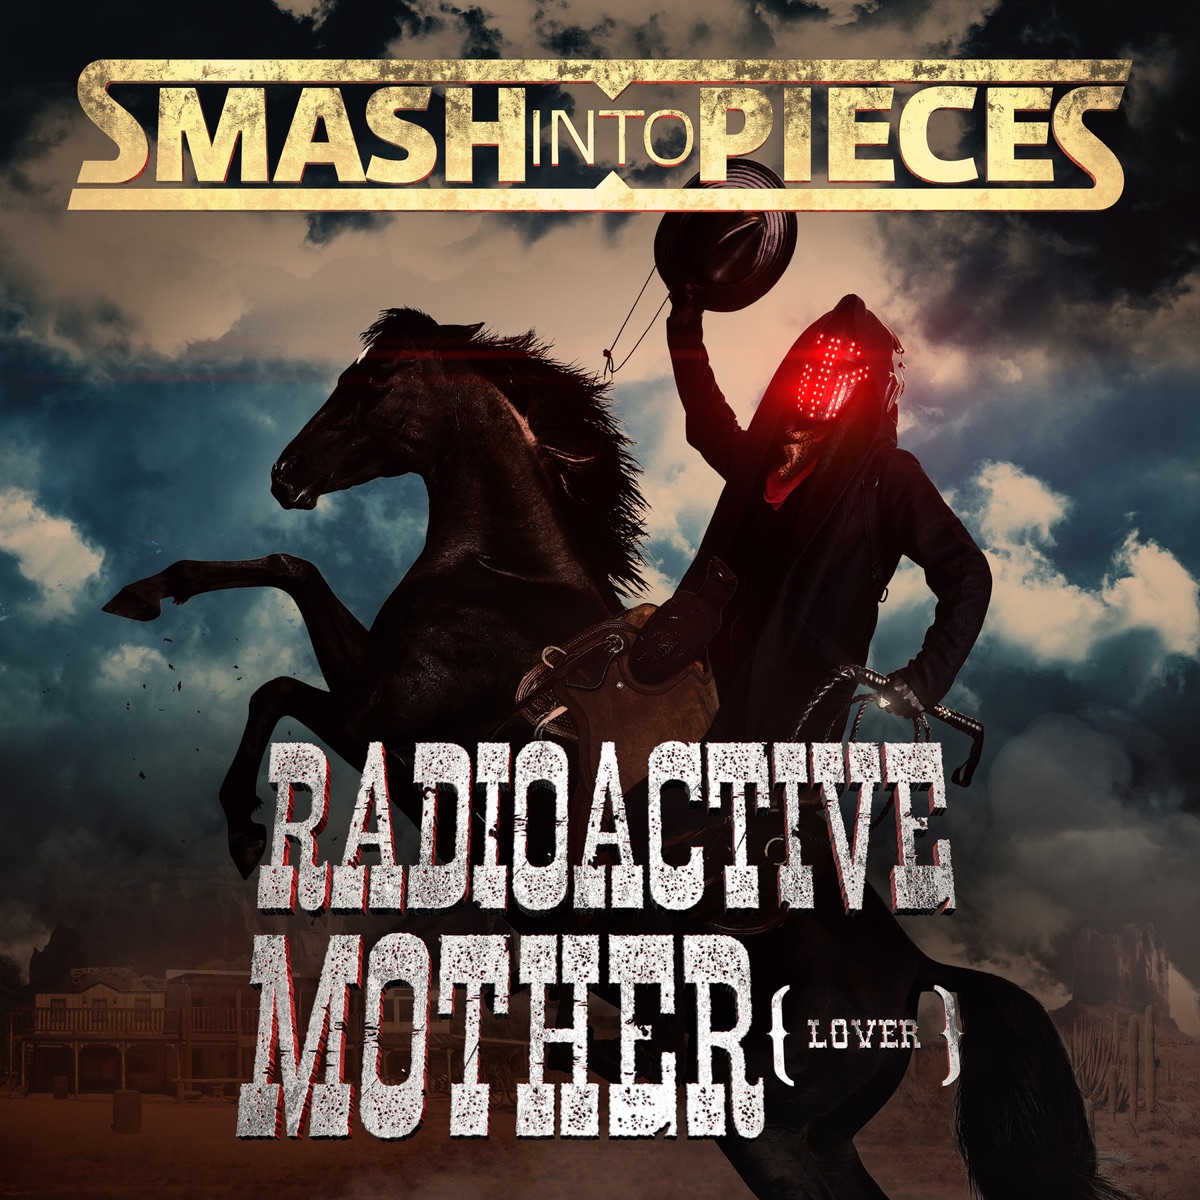 Smash Into Pieces - Everything They S4y (Tradução) 